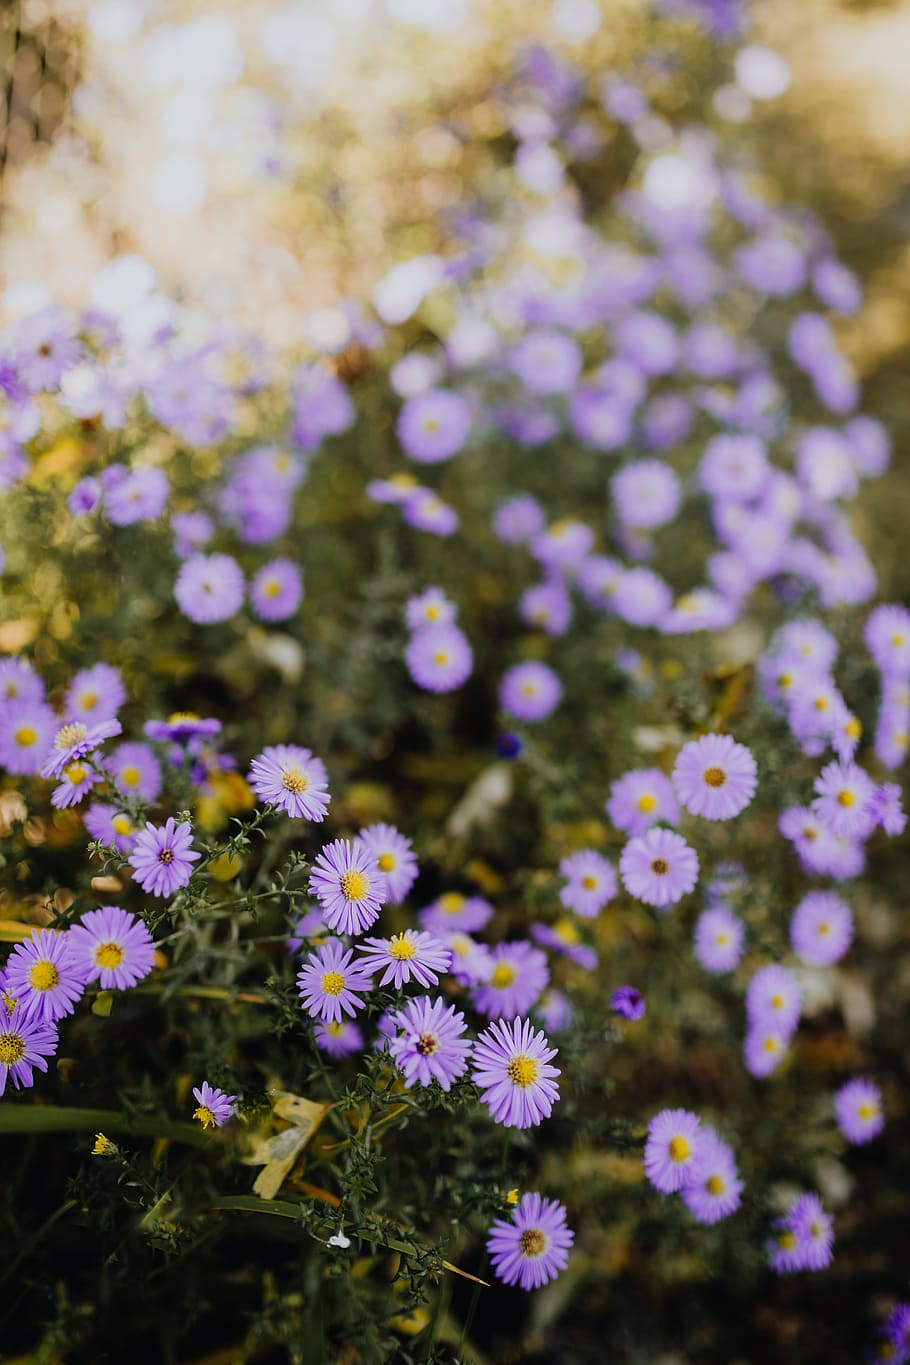 kecil, ungu, bunga, taman, bunga ungu, musim gugur, tanaman berbunga, kesegaran, kerapuhan, kerentanan